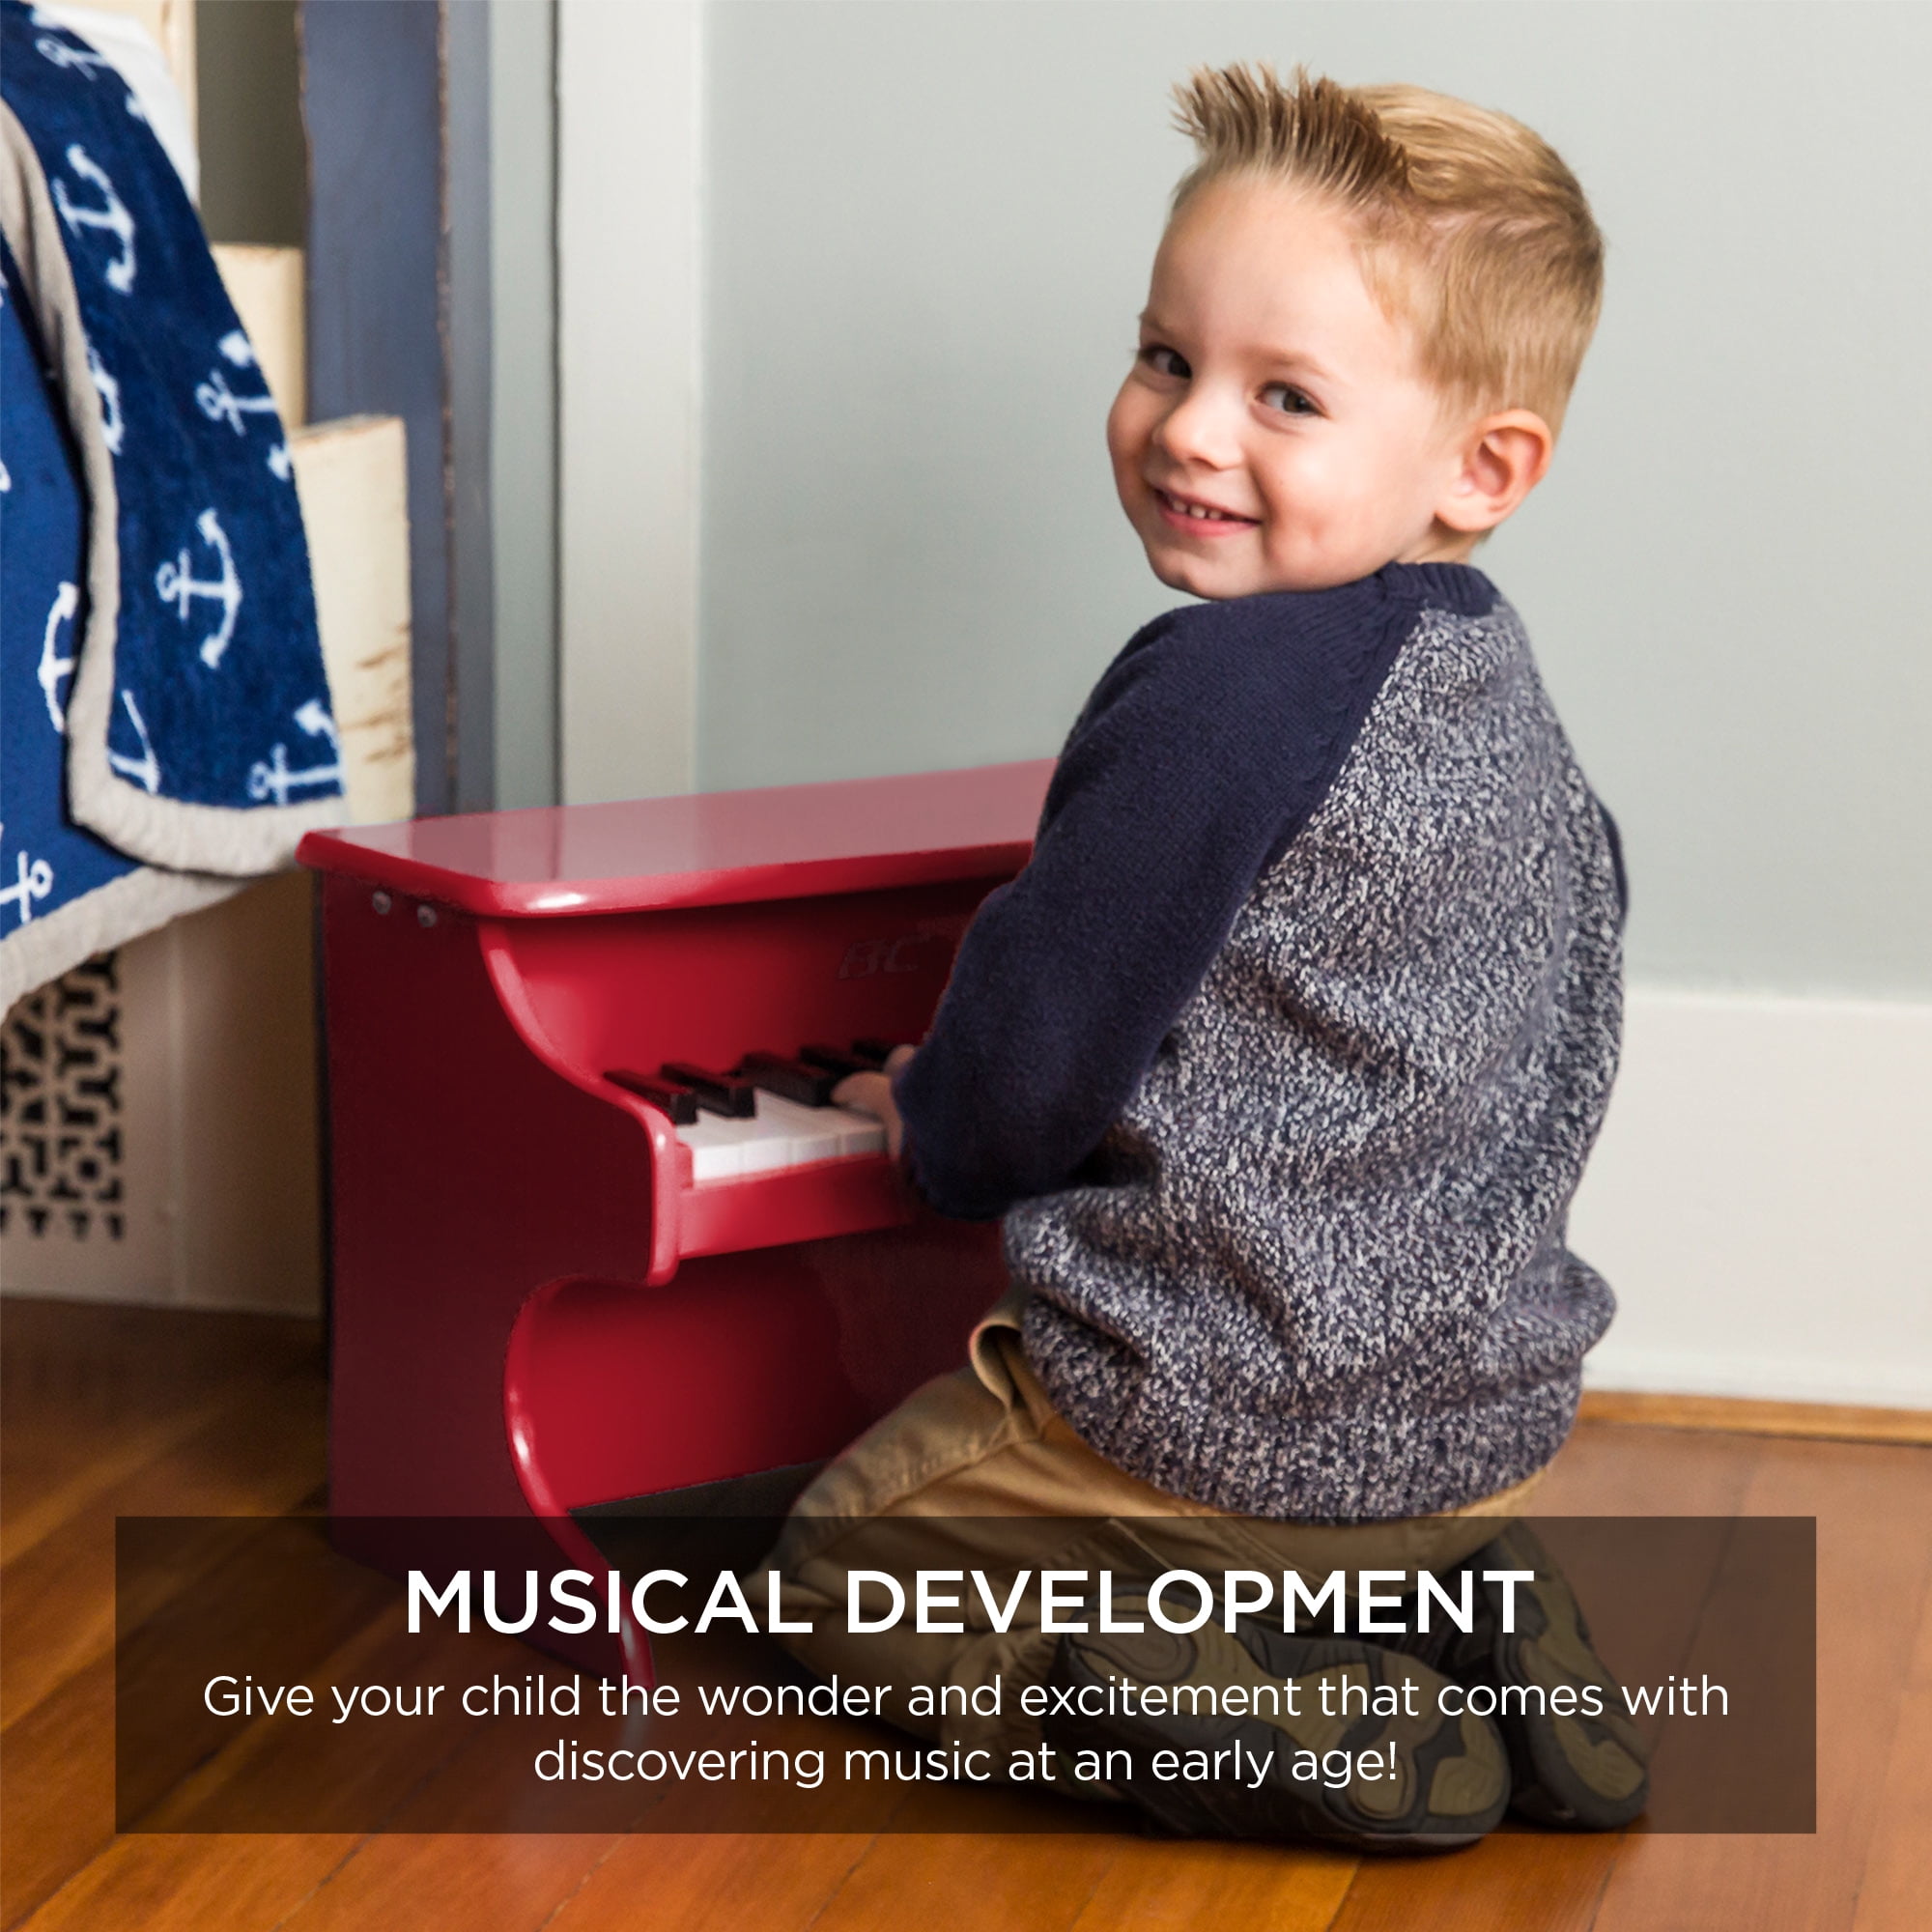 LUOZZY Mini piano de madeira de piano de piano de piano para piano (rosa) :  : Brinquedos e Jogos